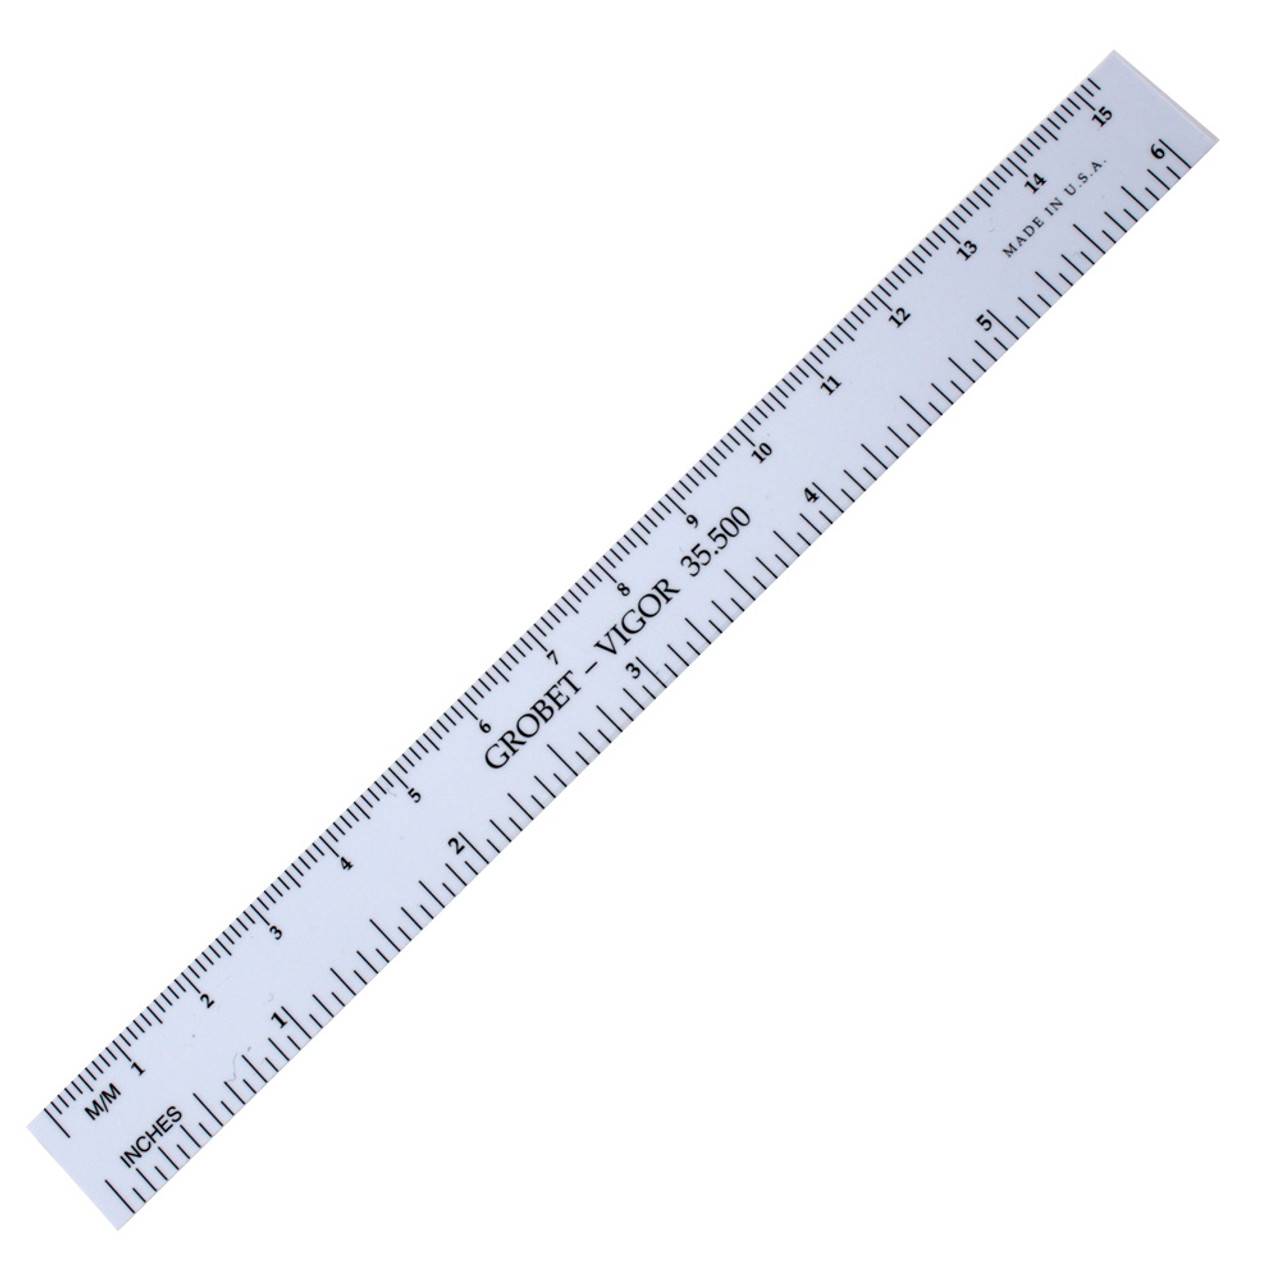 6 inch ruler